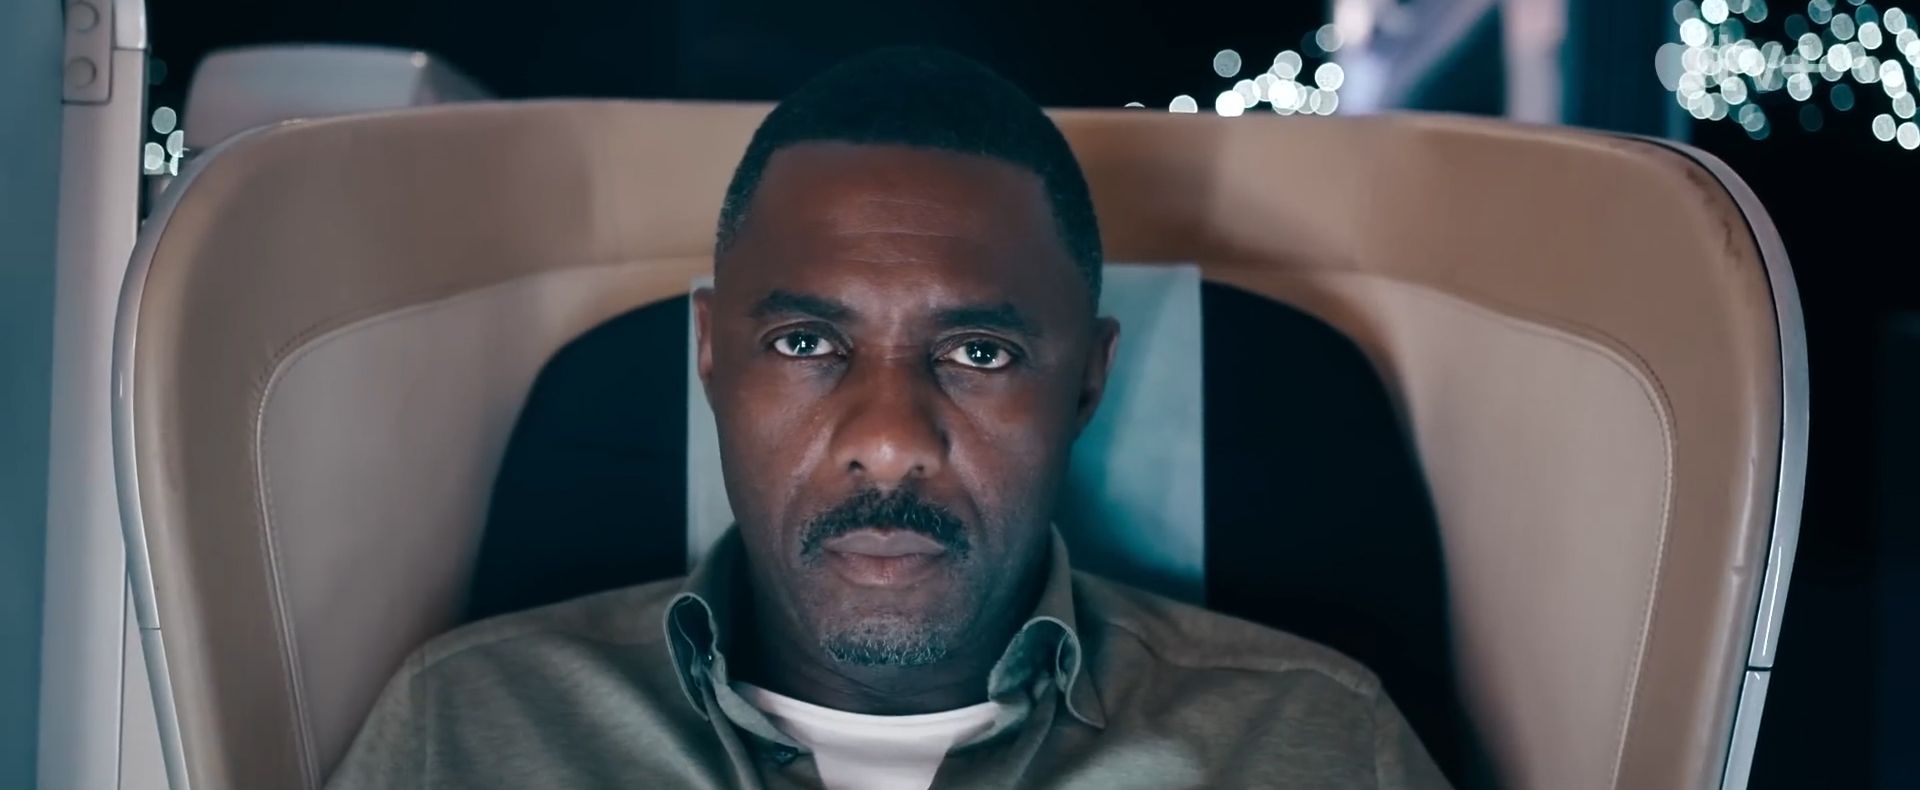 Choke Hold - Song by Idris Elba & Mr. Kipper - Apple Music